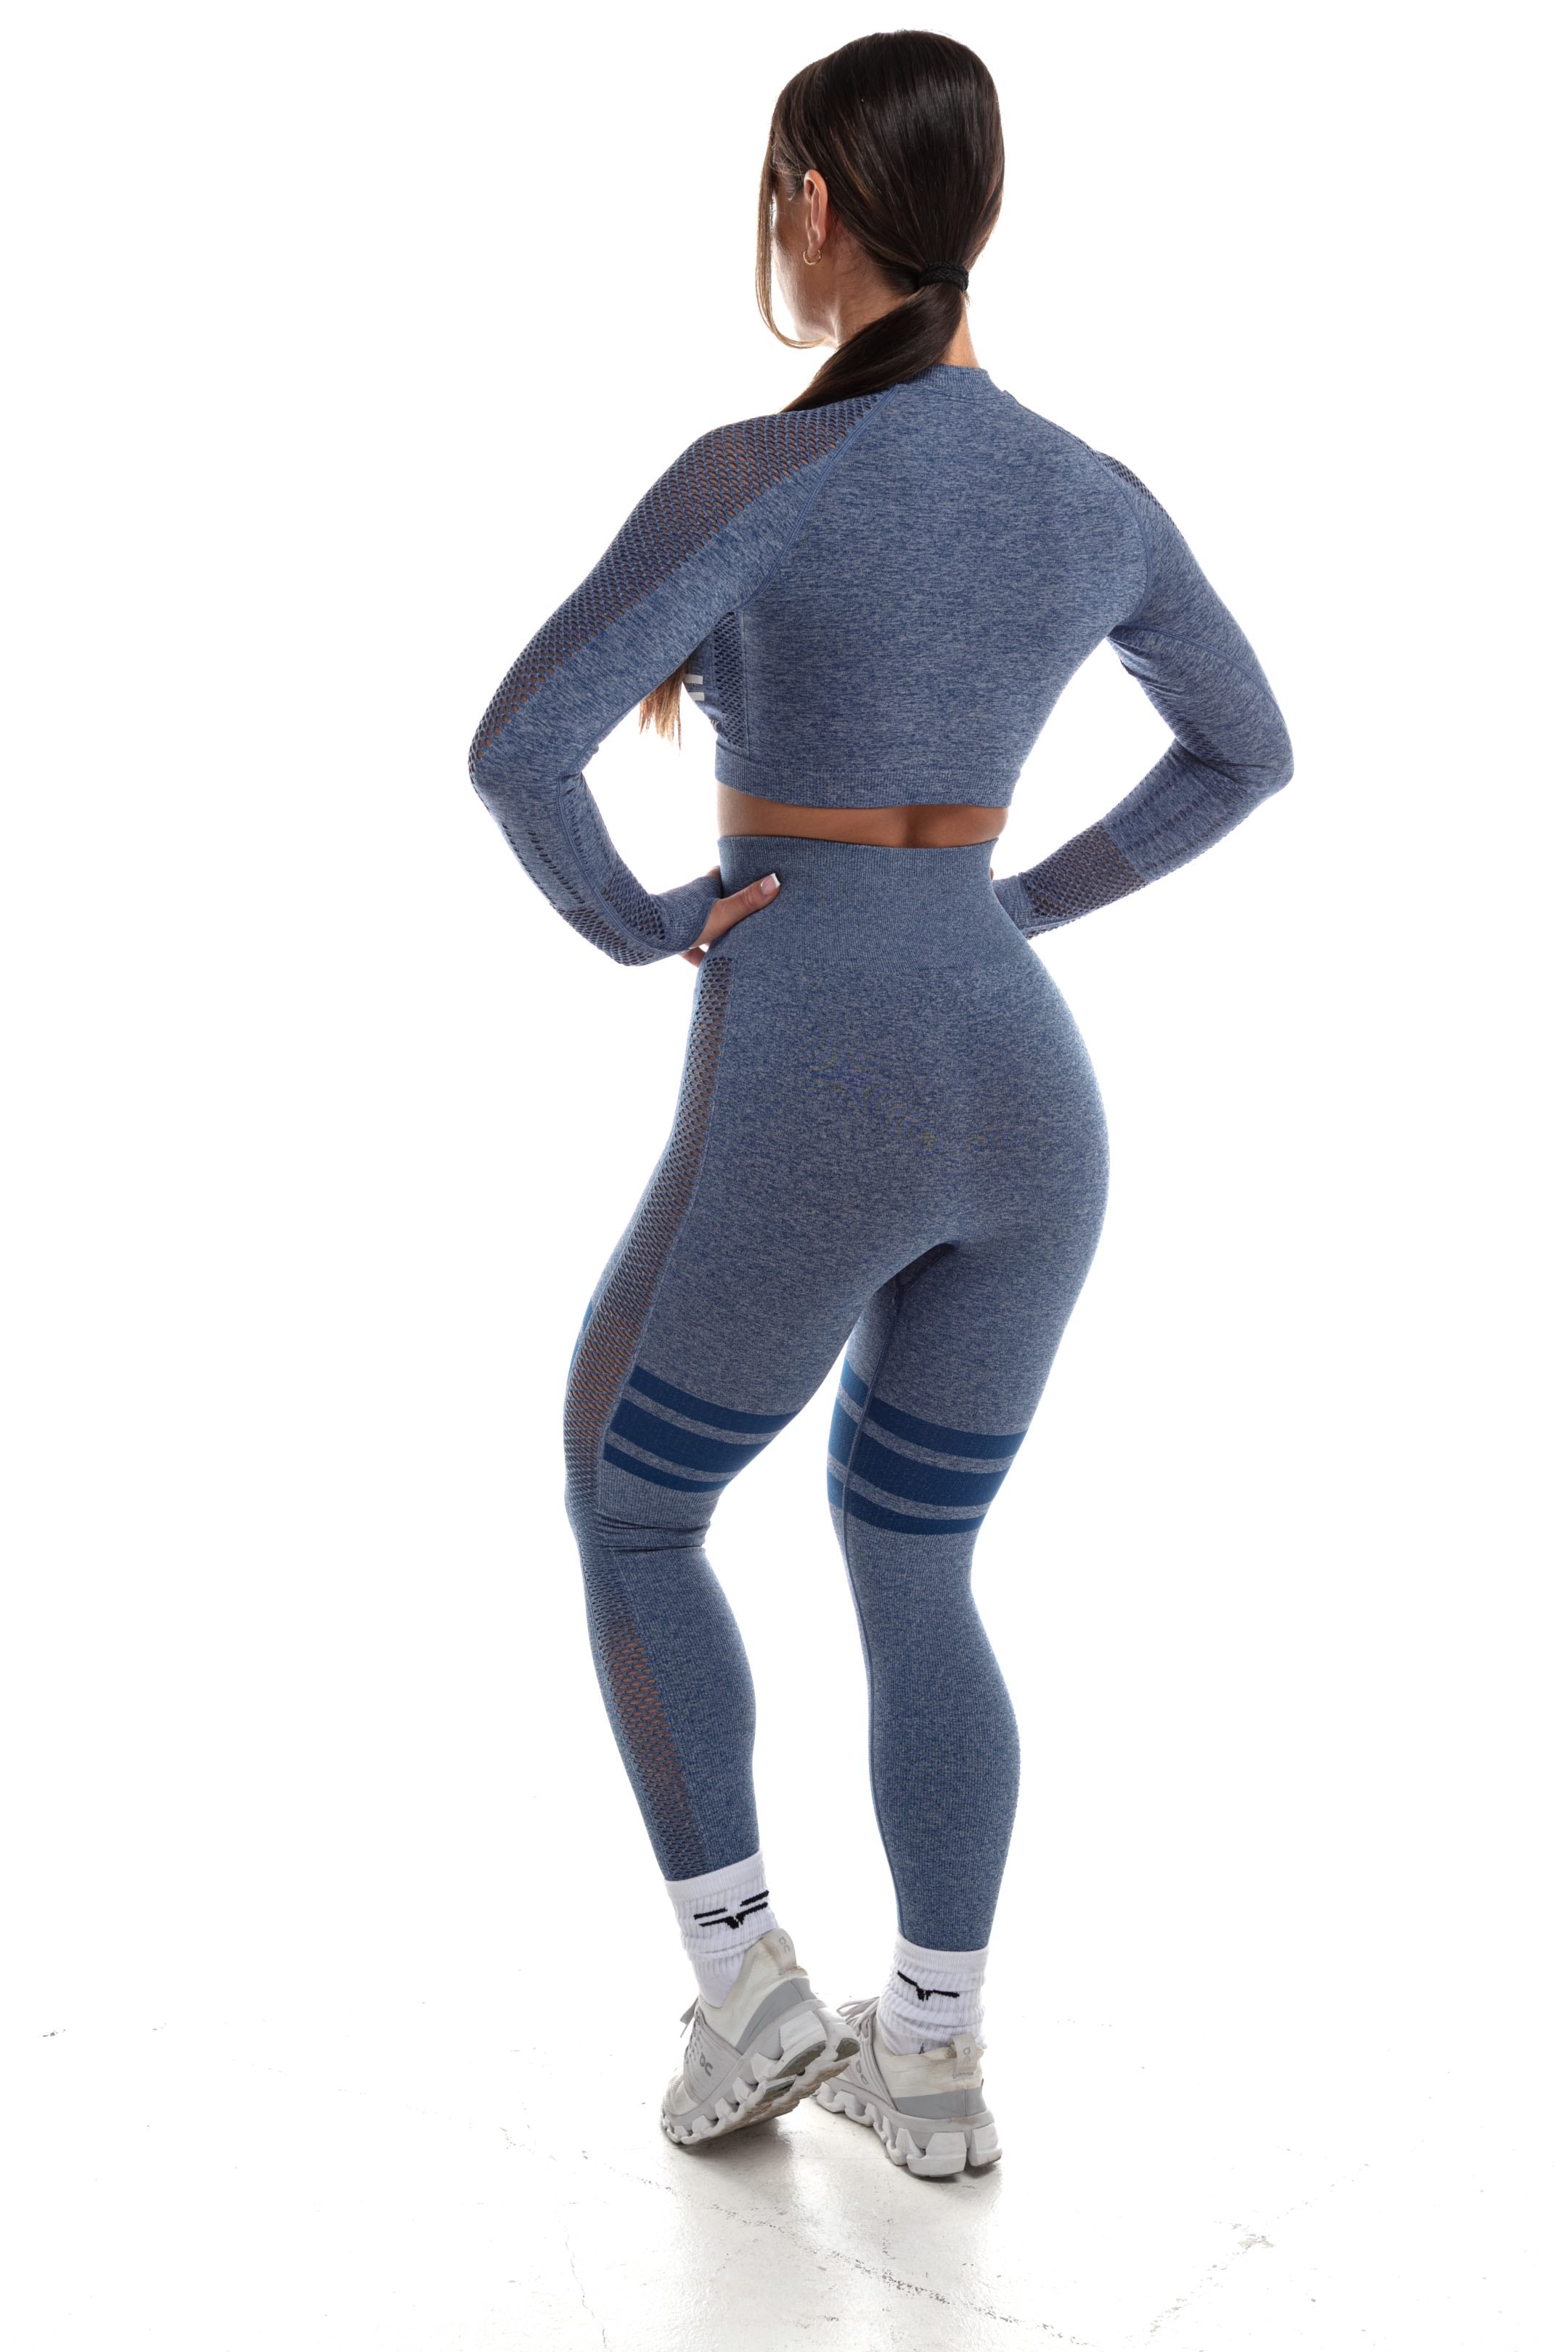 GymFreak Womens Yoga Set - Blue